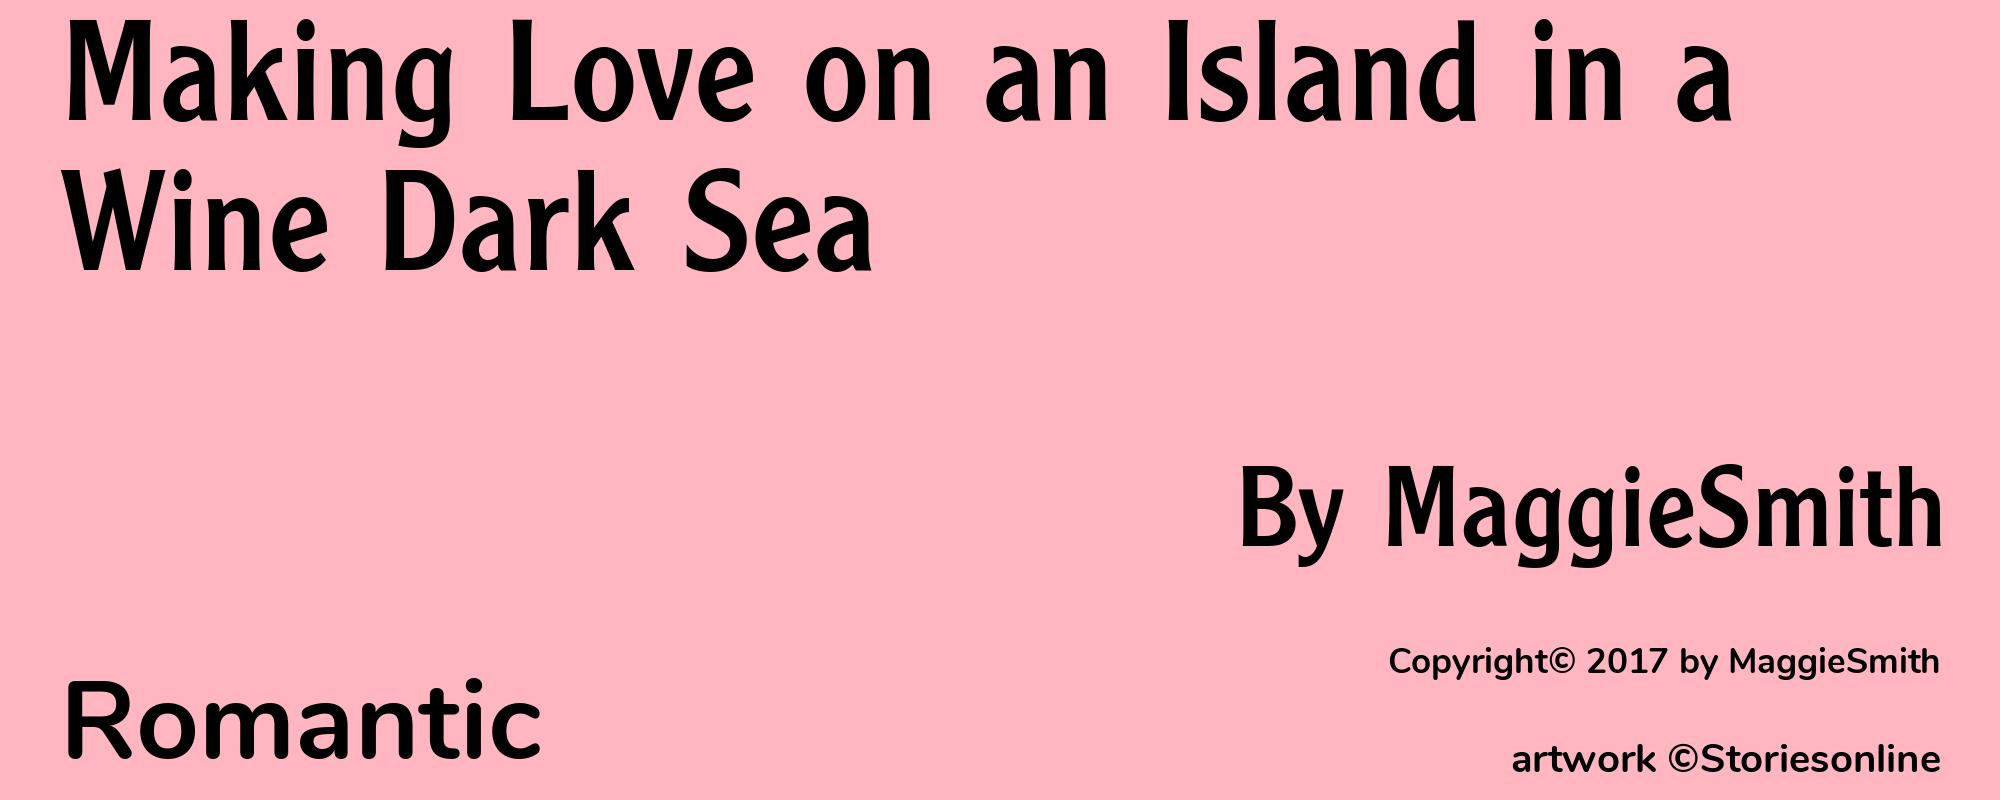 Making Love on an Island in a Wine Dark Sea - Cover